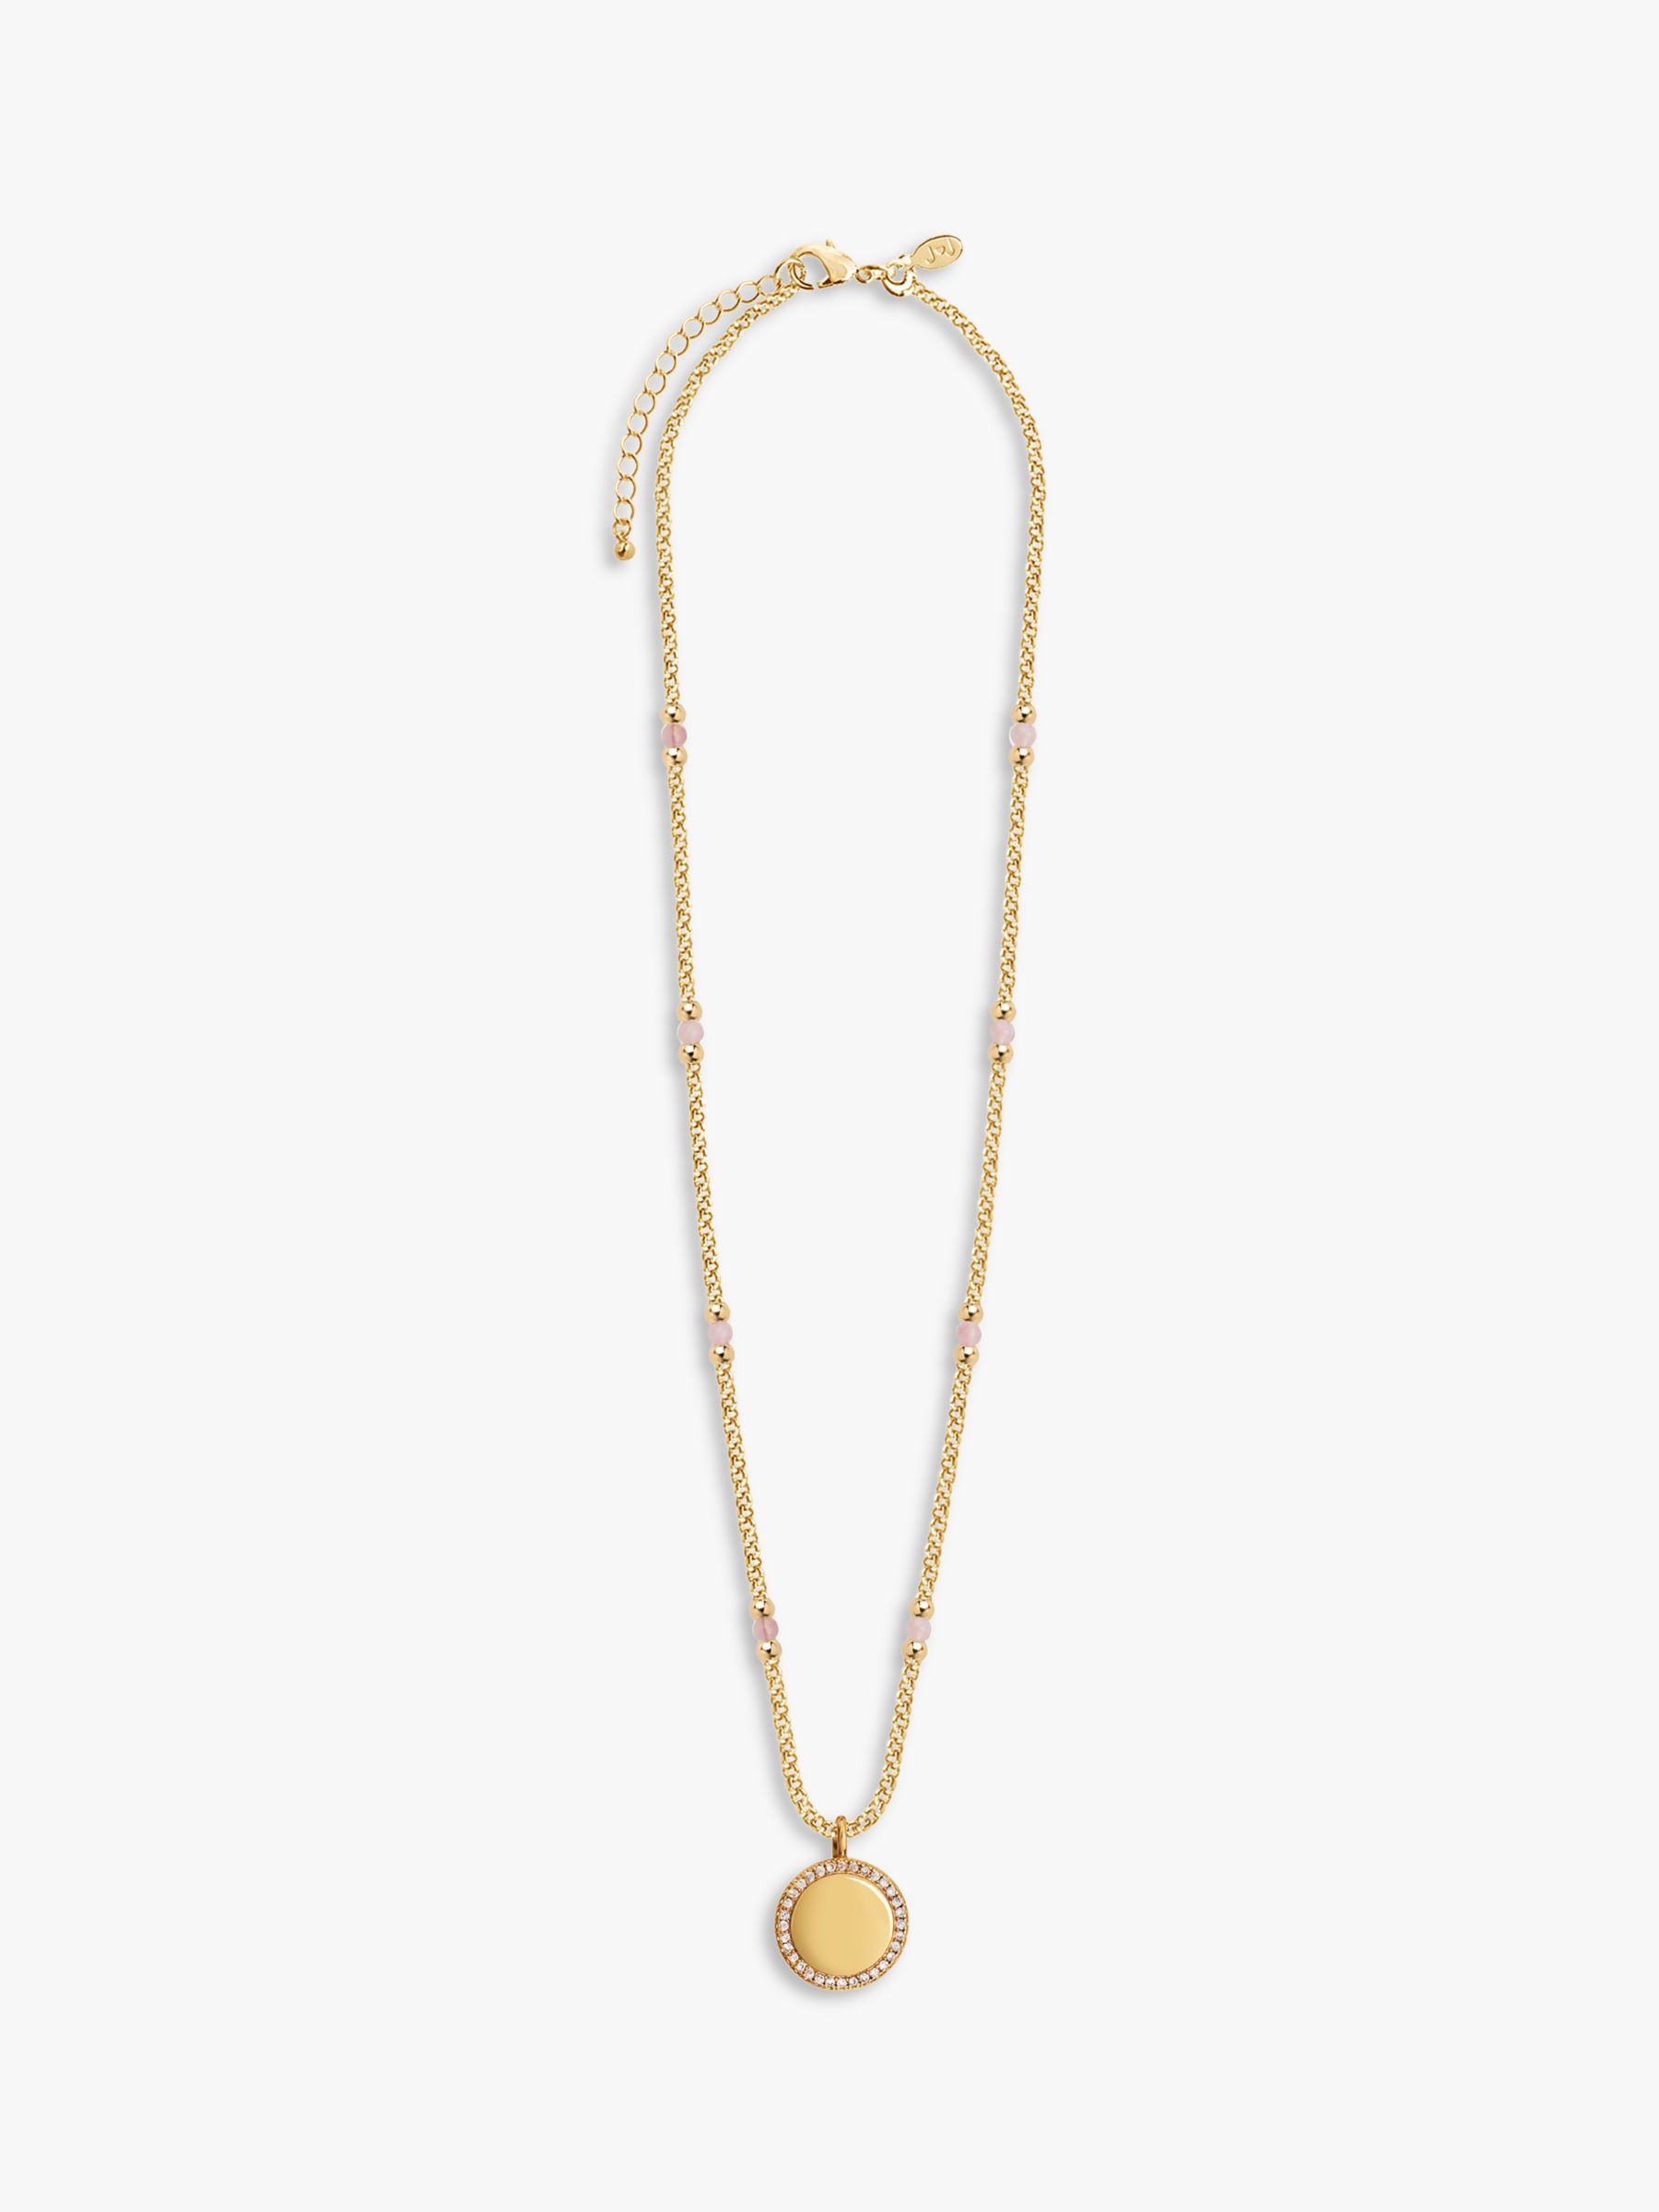 Joma Jewellery Wellness Gems Rose Quartz Pendant Necklace, Gold